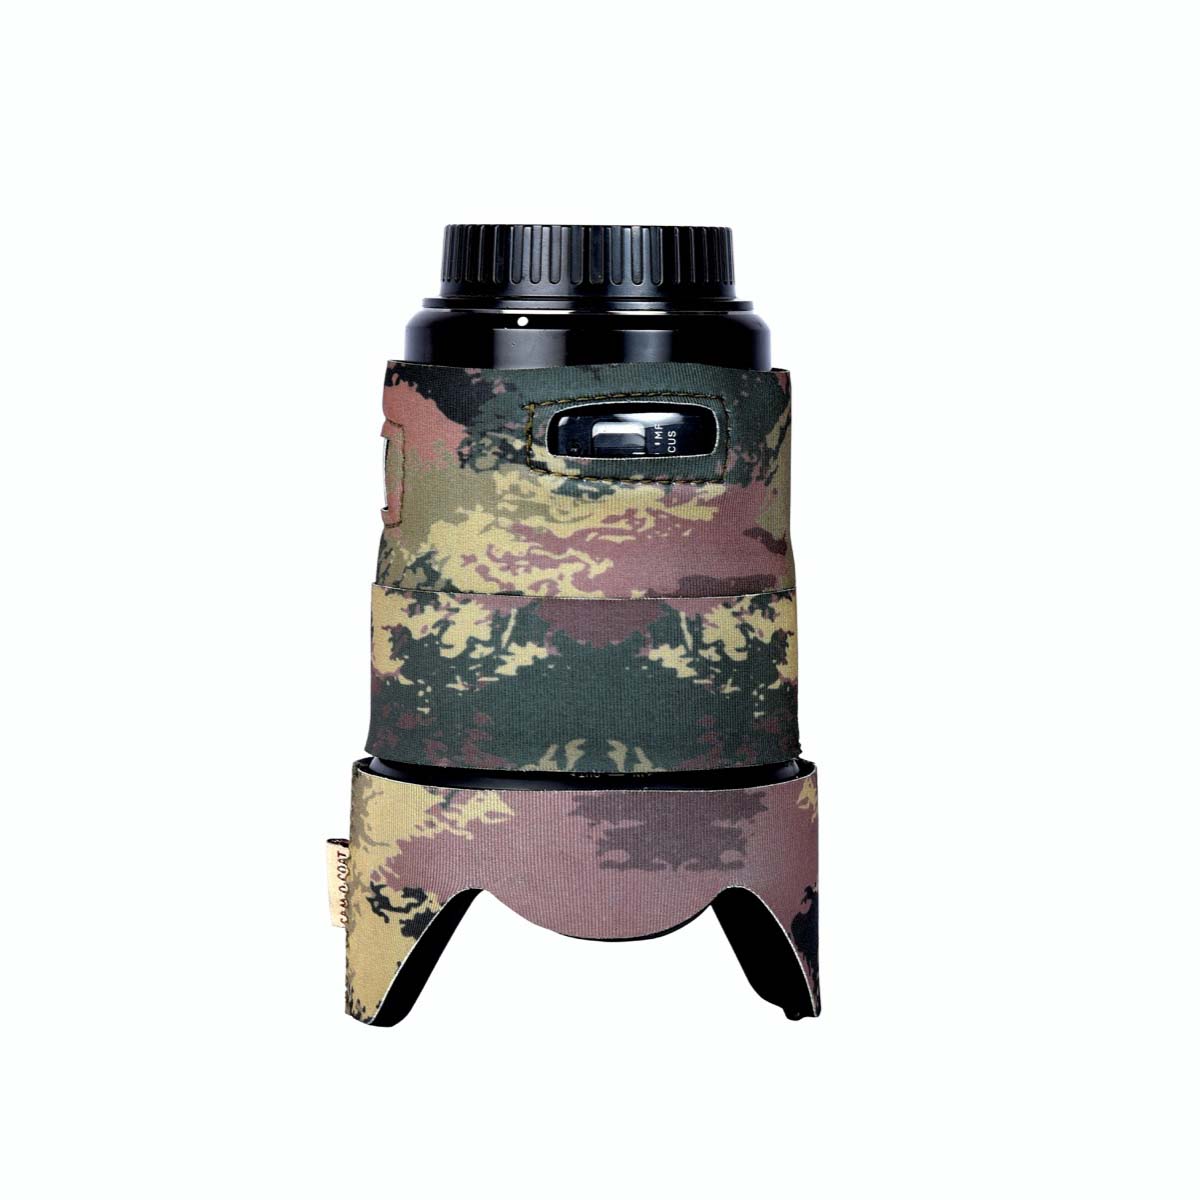 Coat for Sigma 35mm F/1.4 DG HSM Art Lens – Camocoat